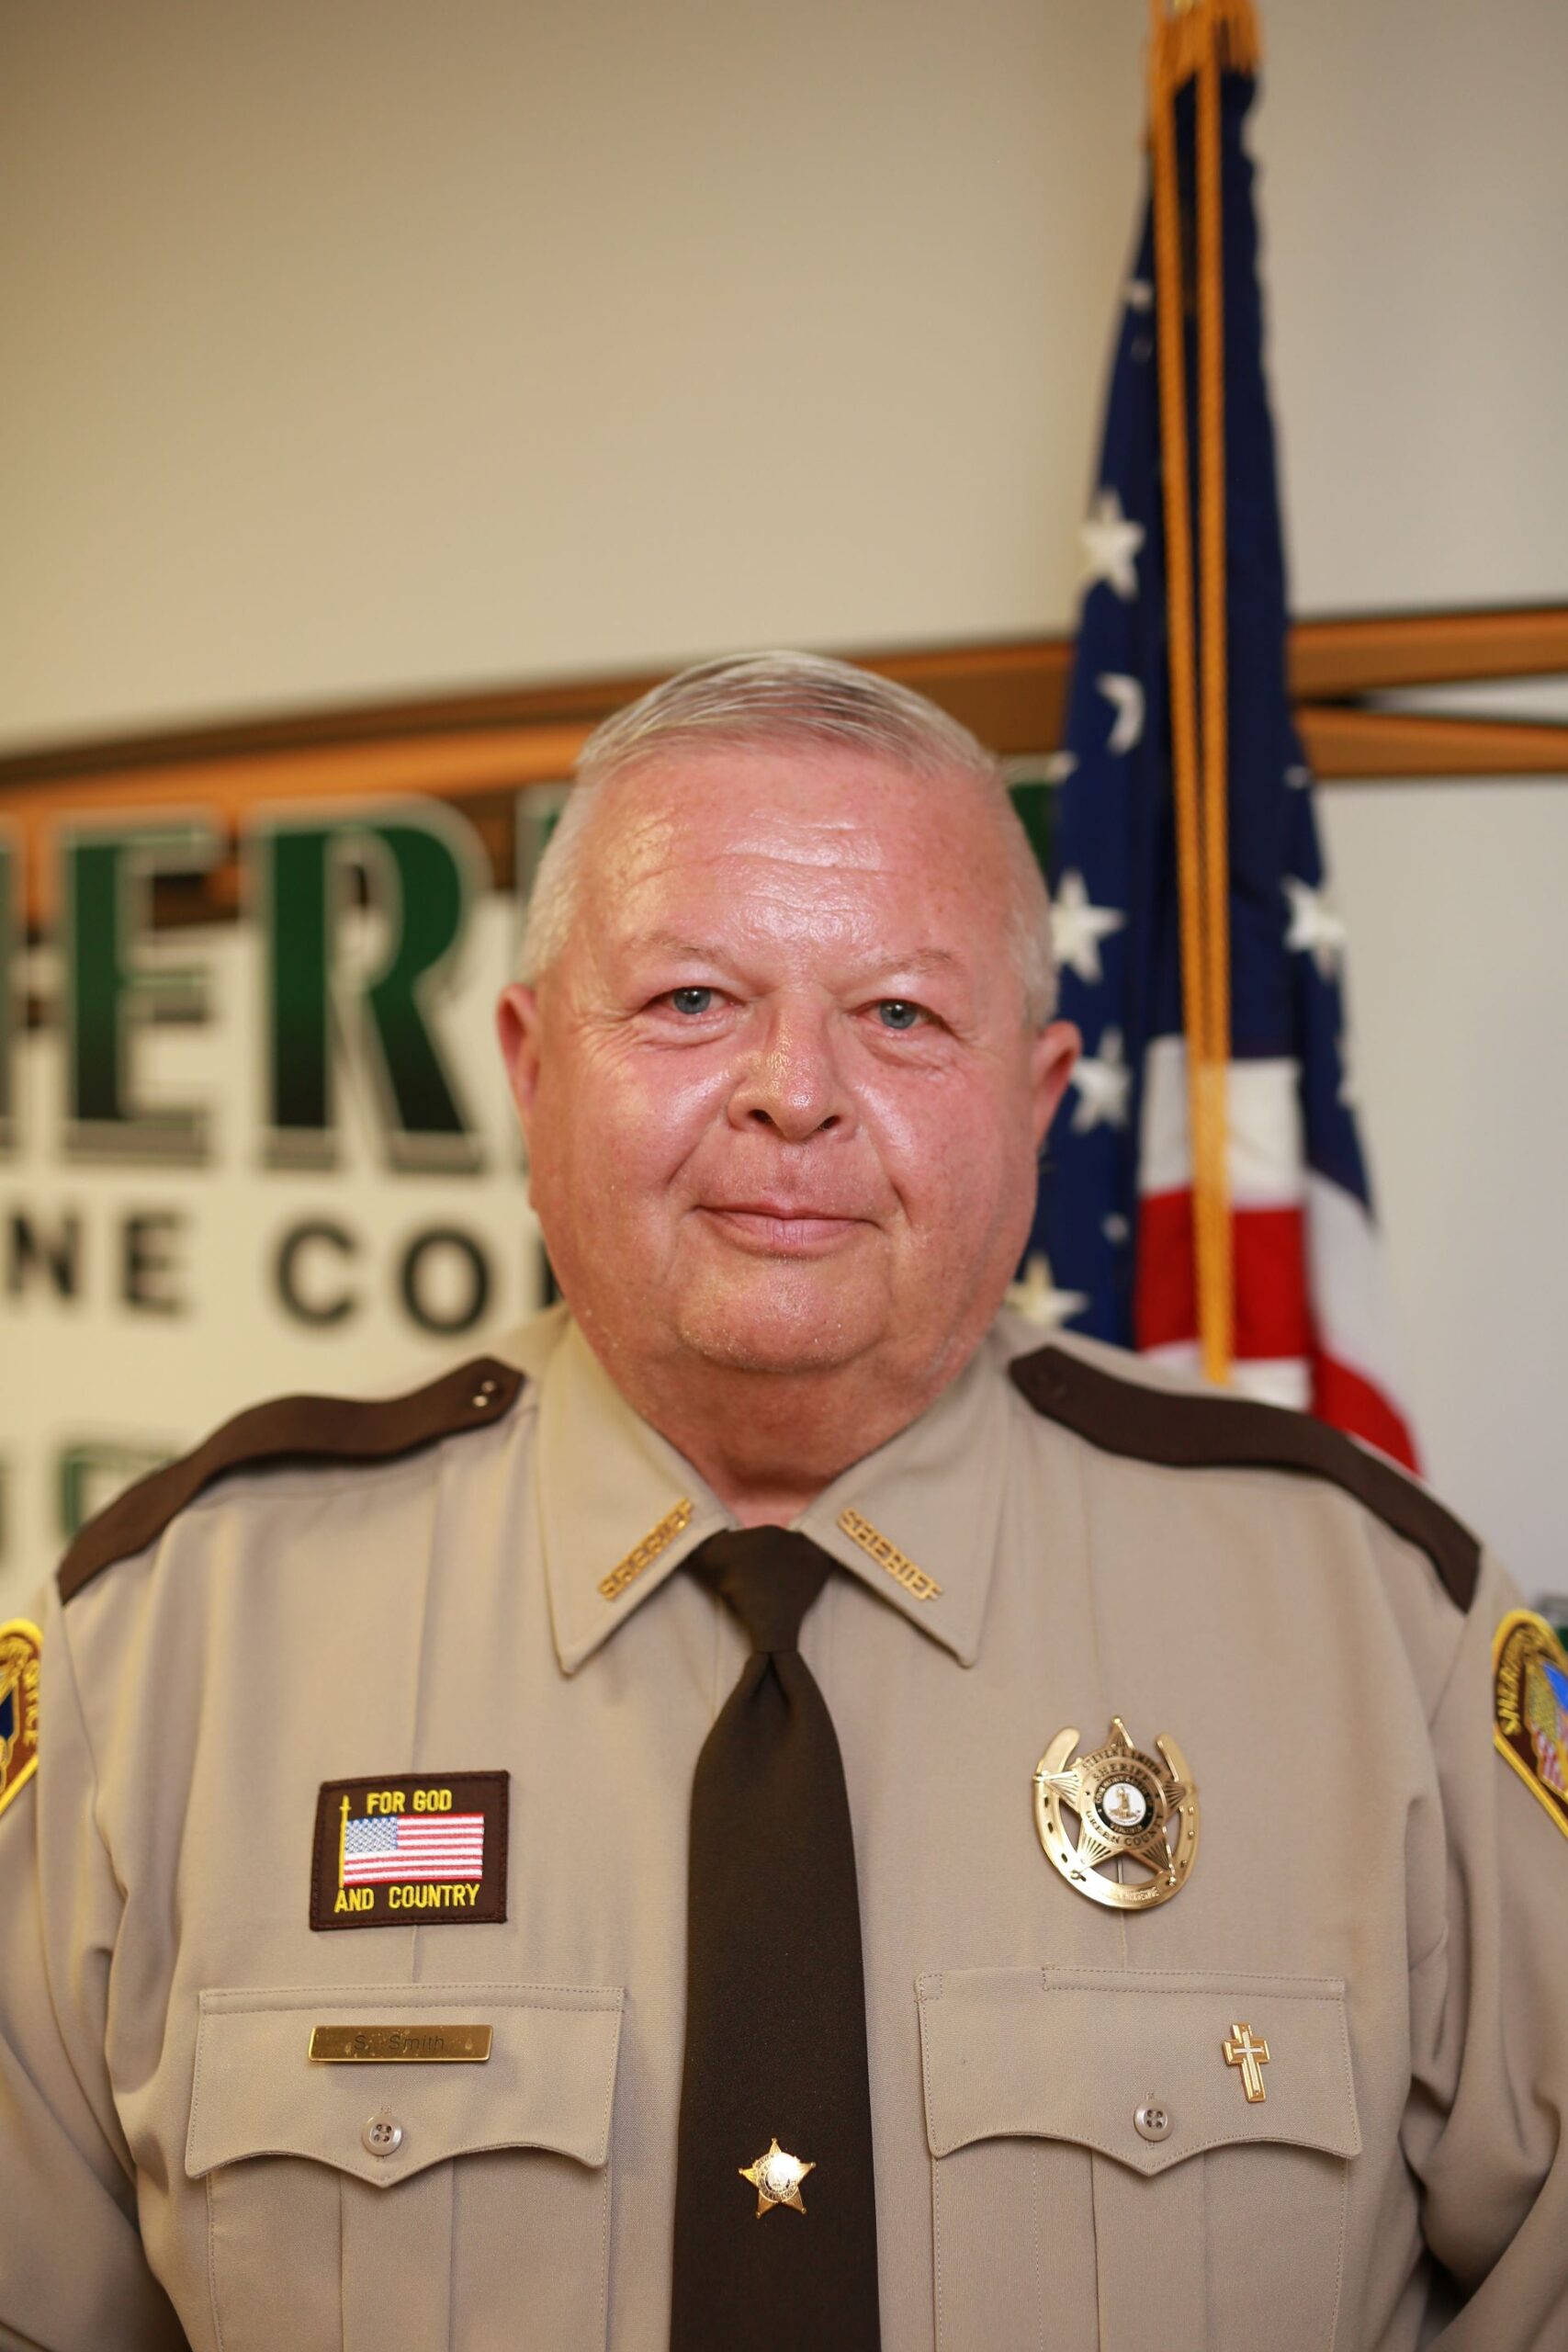 Meet the Sheriff